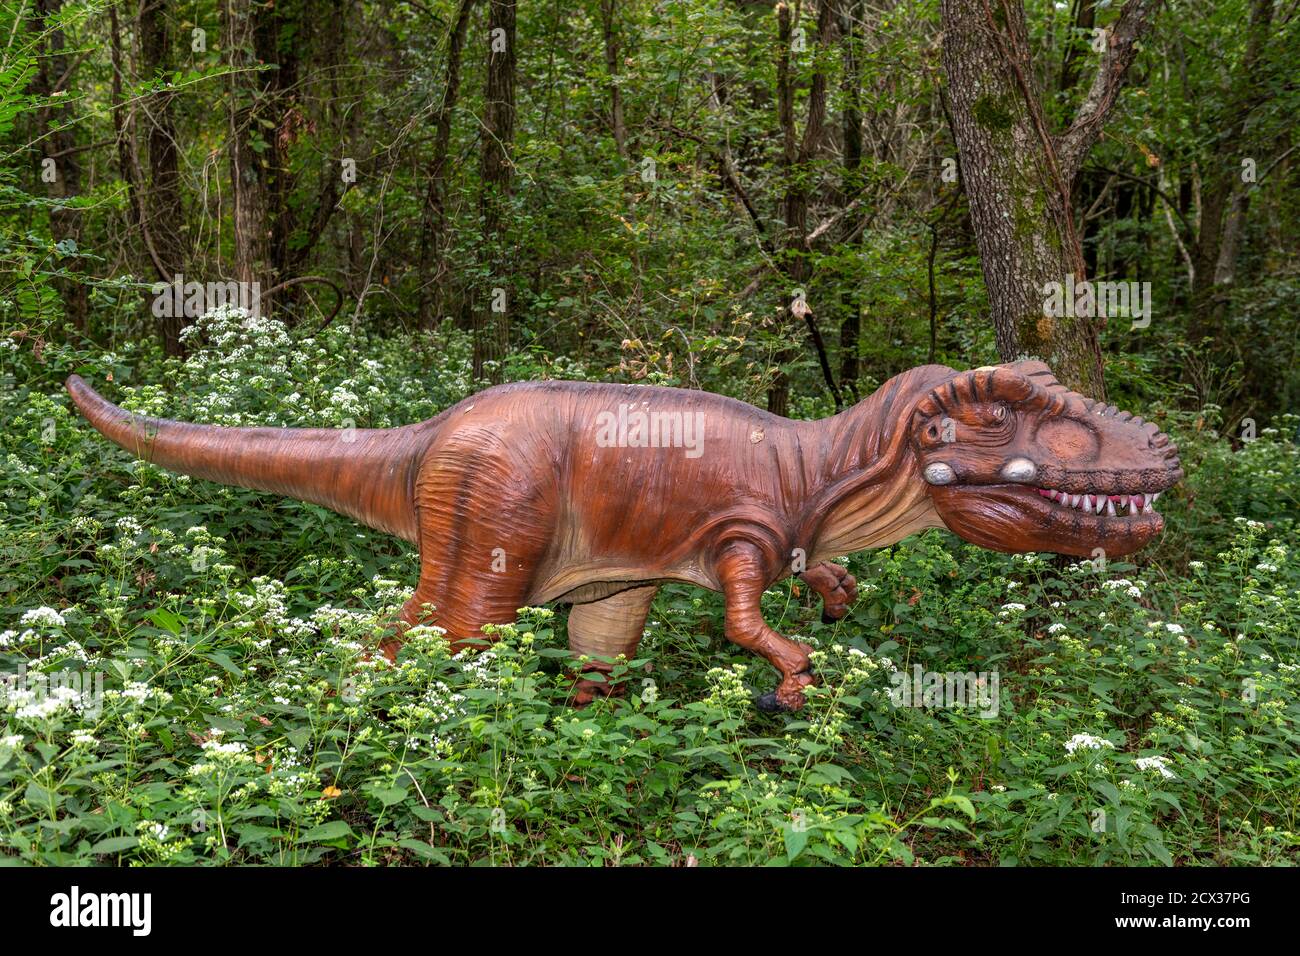 stock photography images Alamy and - Dinosaur world kentucky hi-res